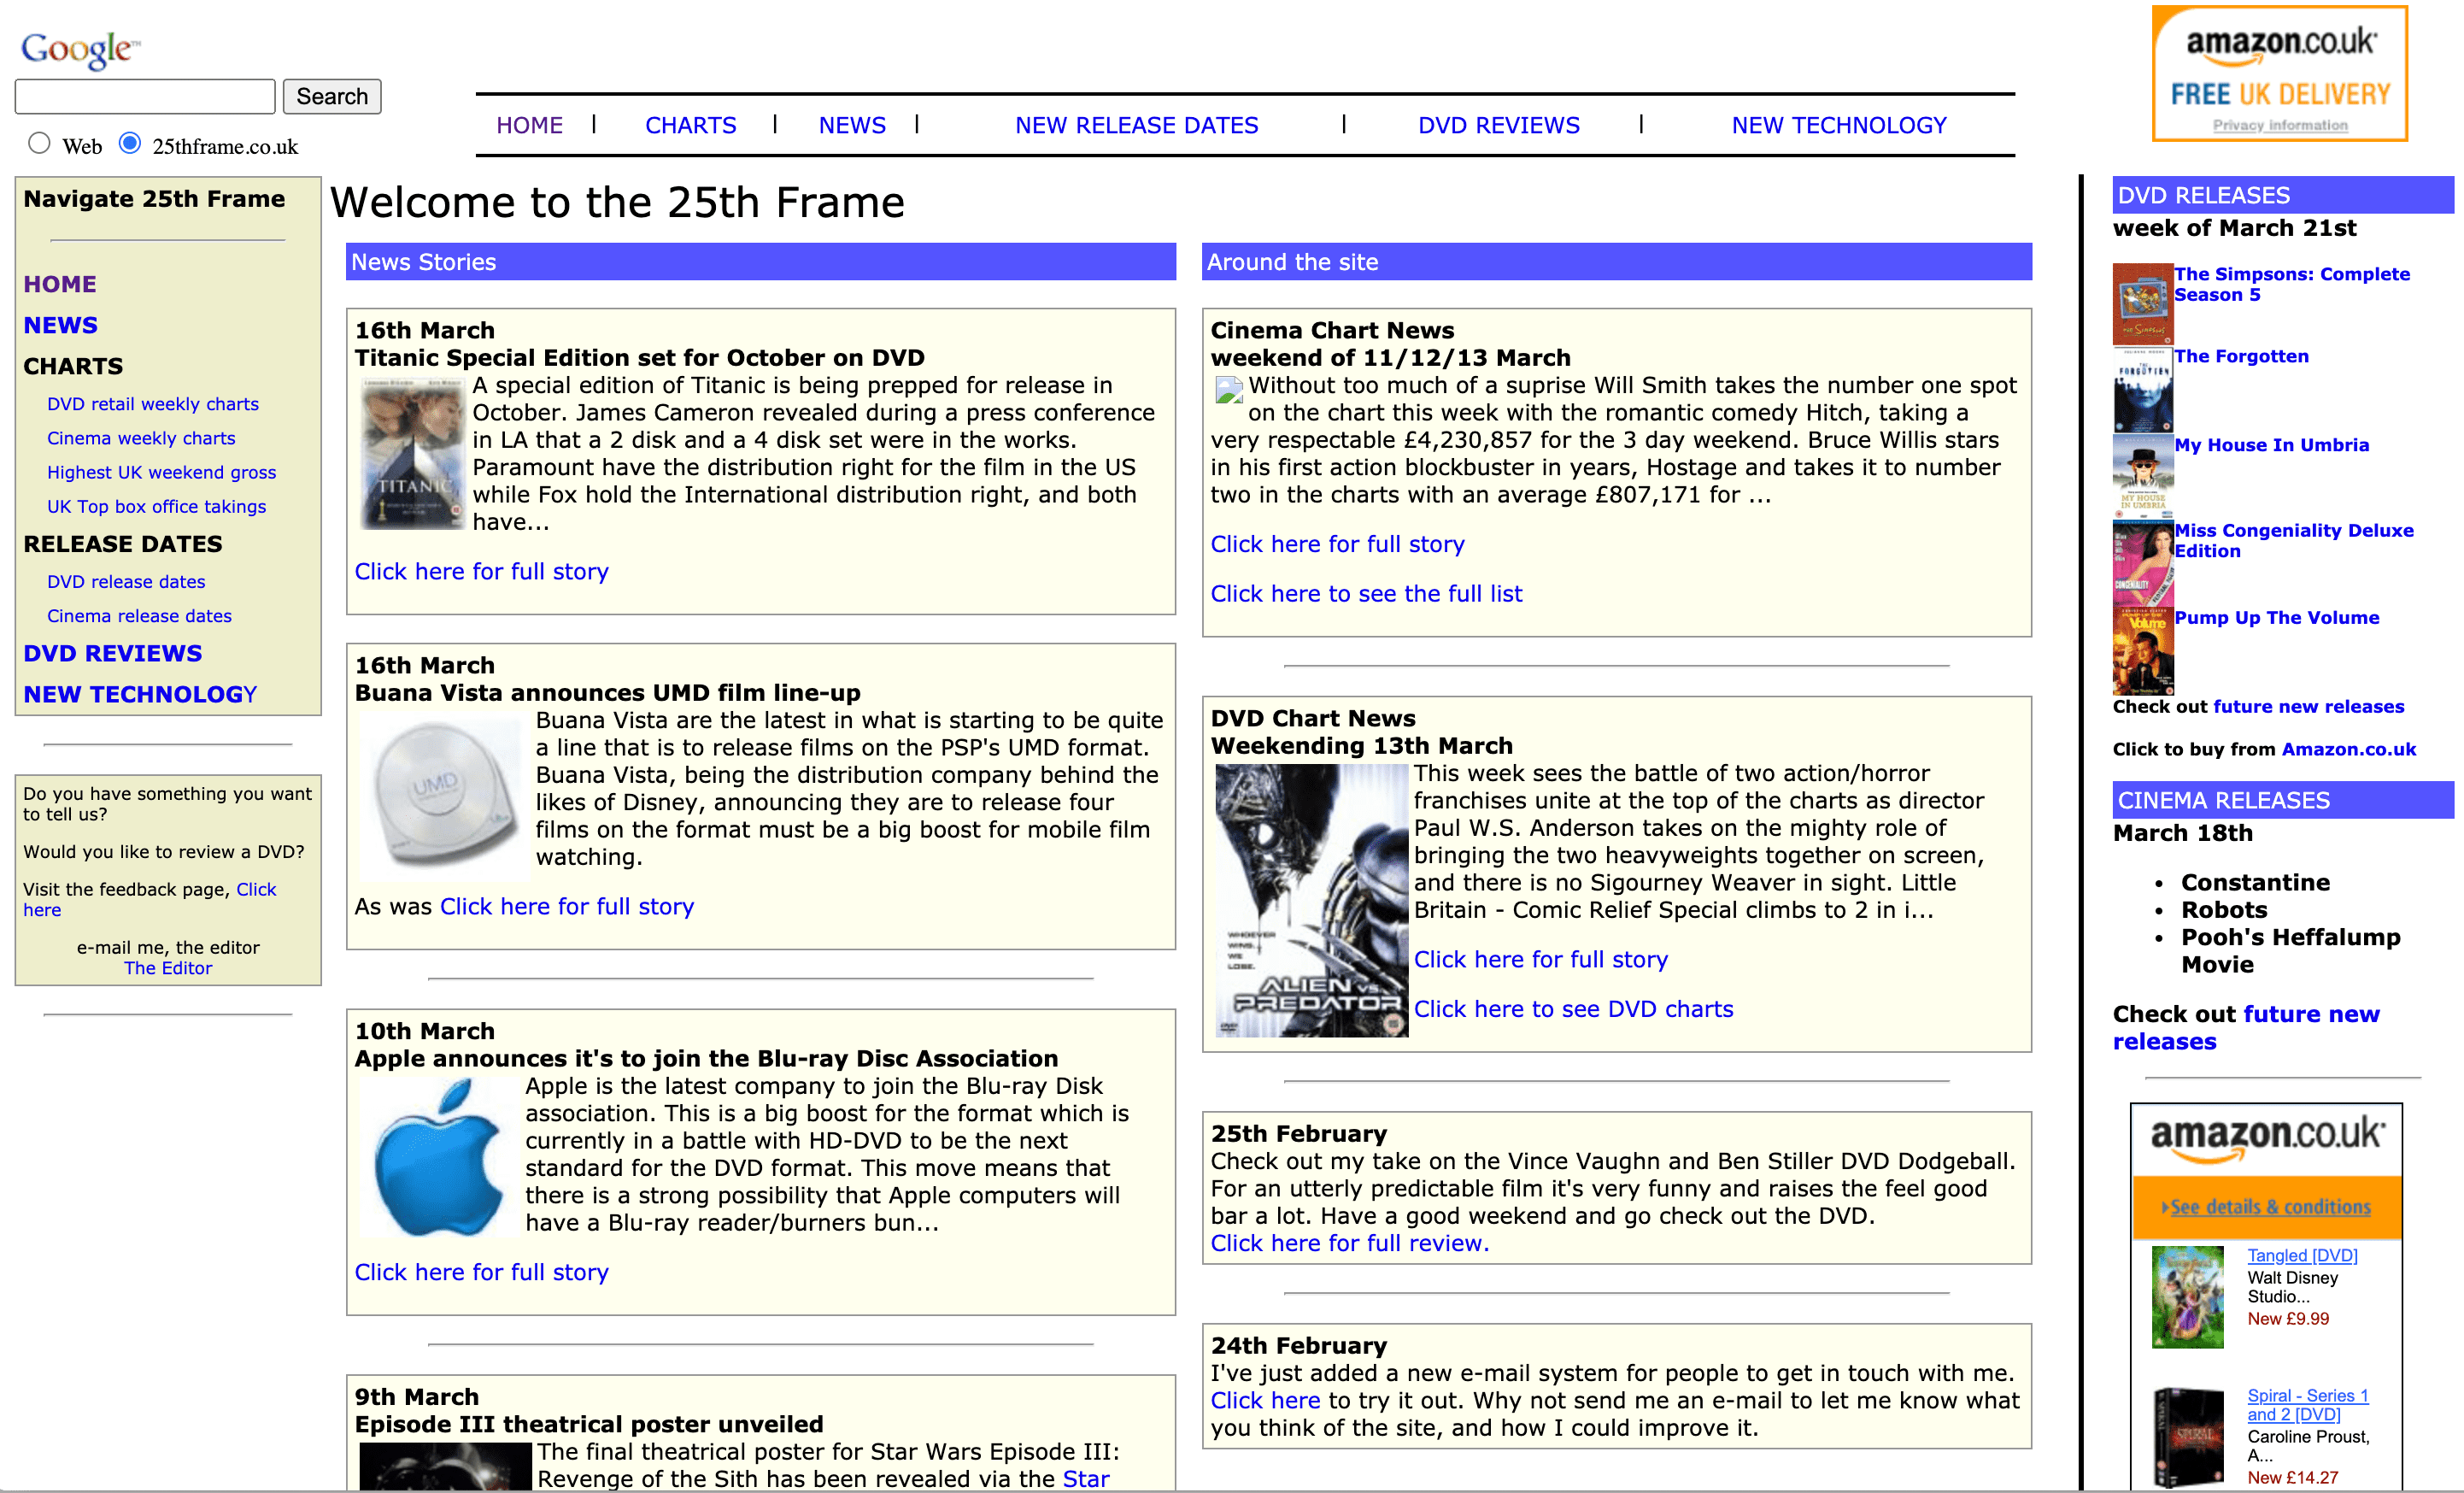 The original 25thframe.co.uk website